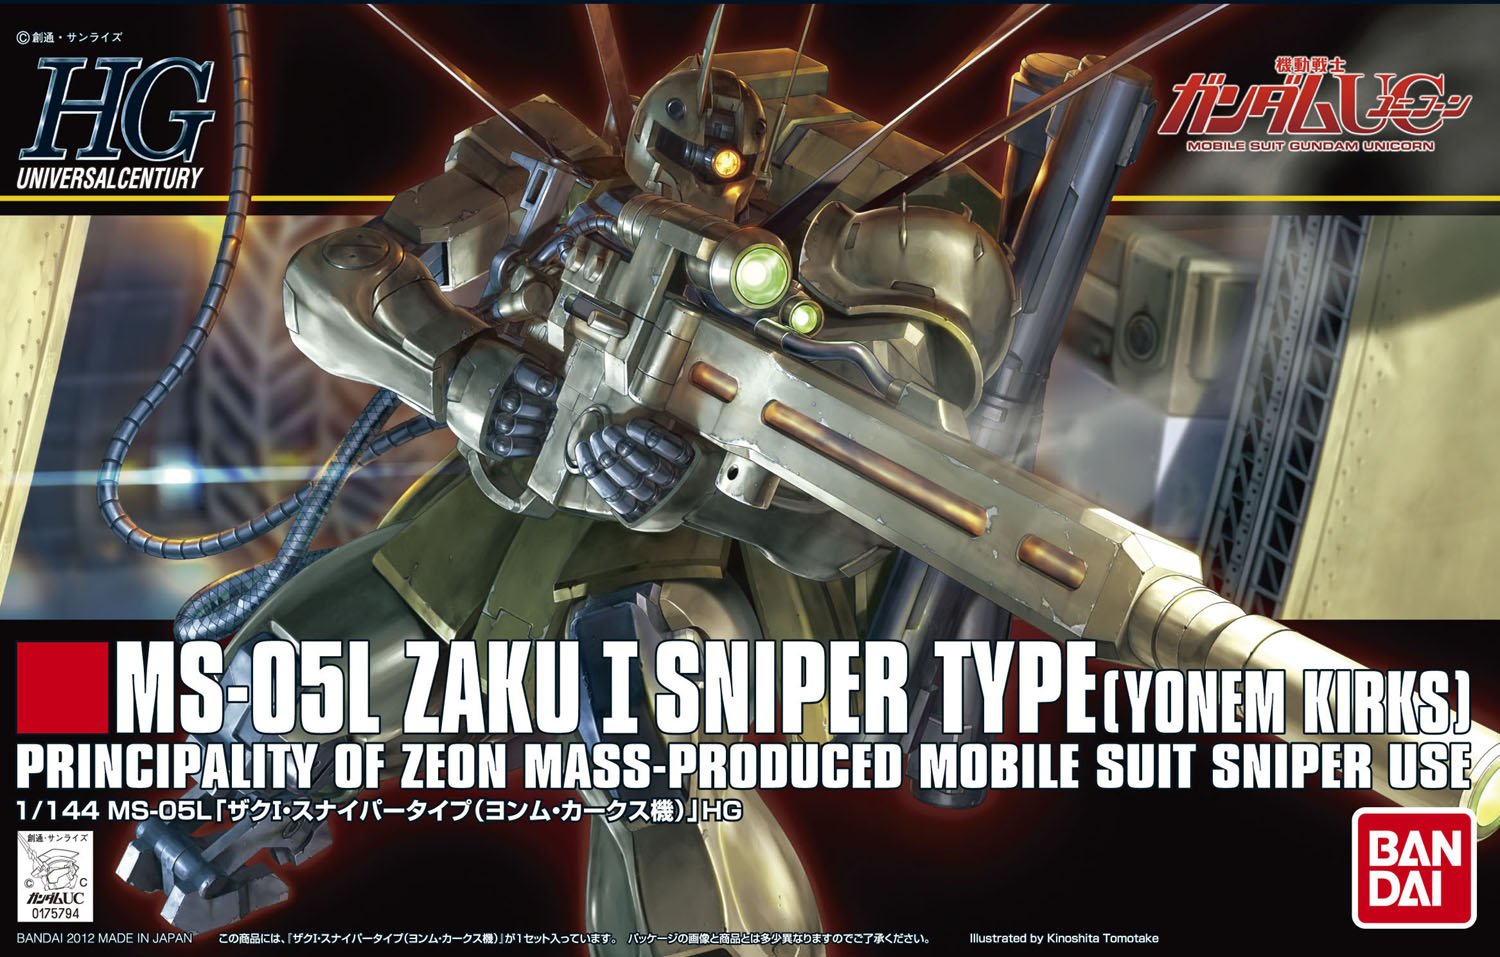 HGUC - MS-05L Zaku I Sniper Type (Yonem Kirks)